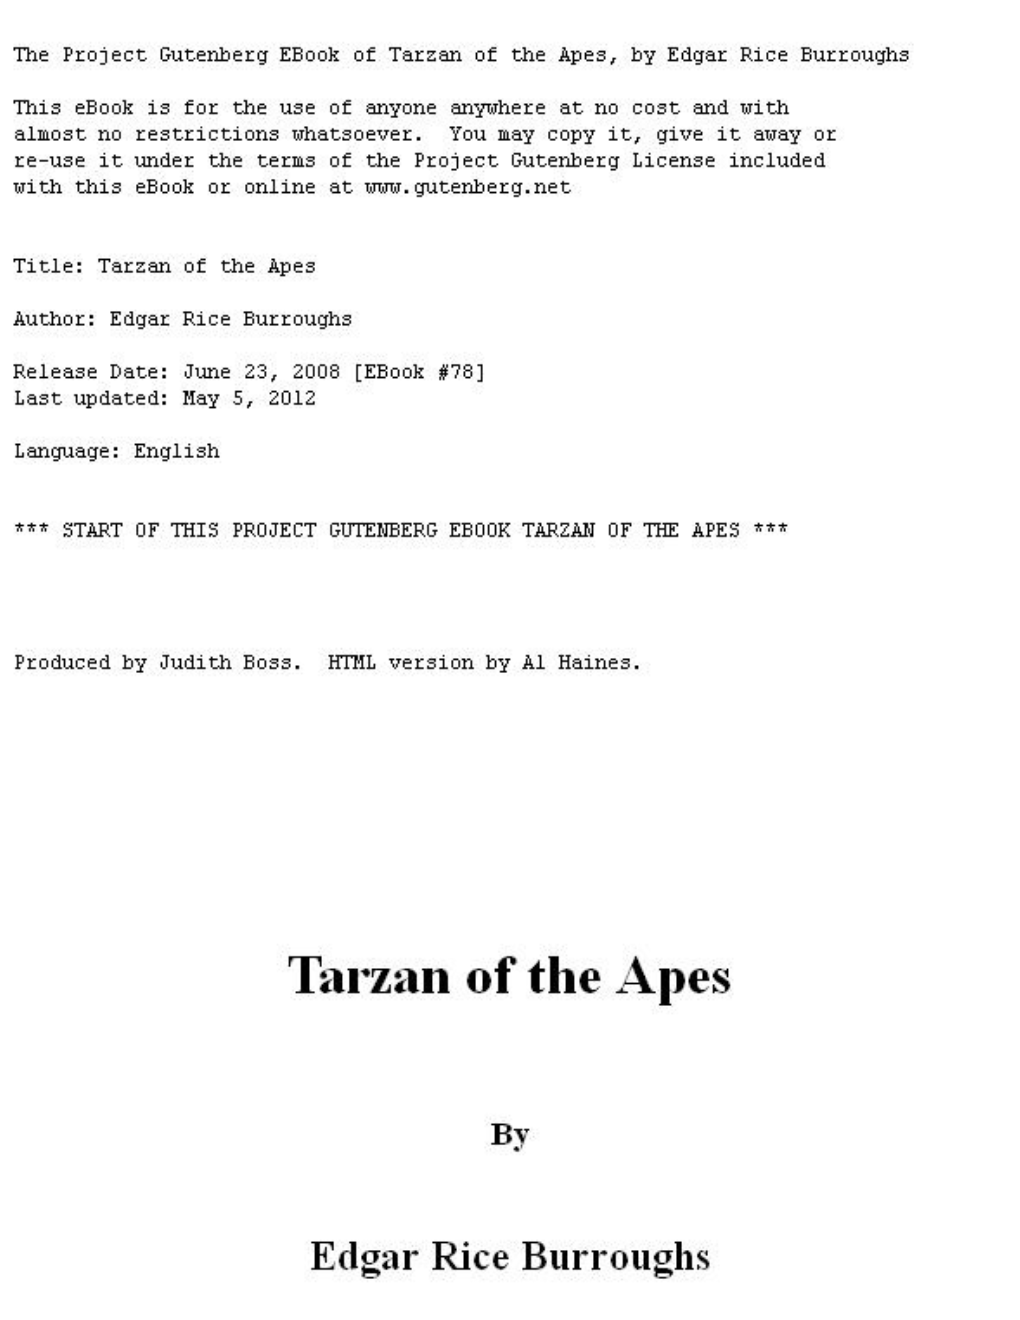 Tarzan of the Apes, by Edgar Rice Burroughs